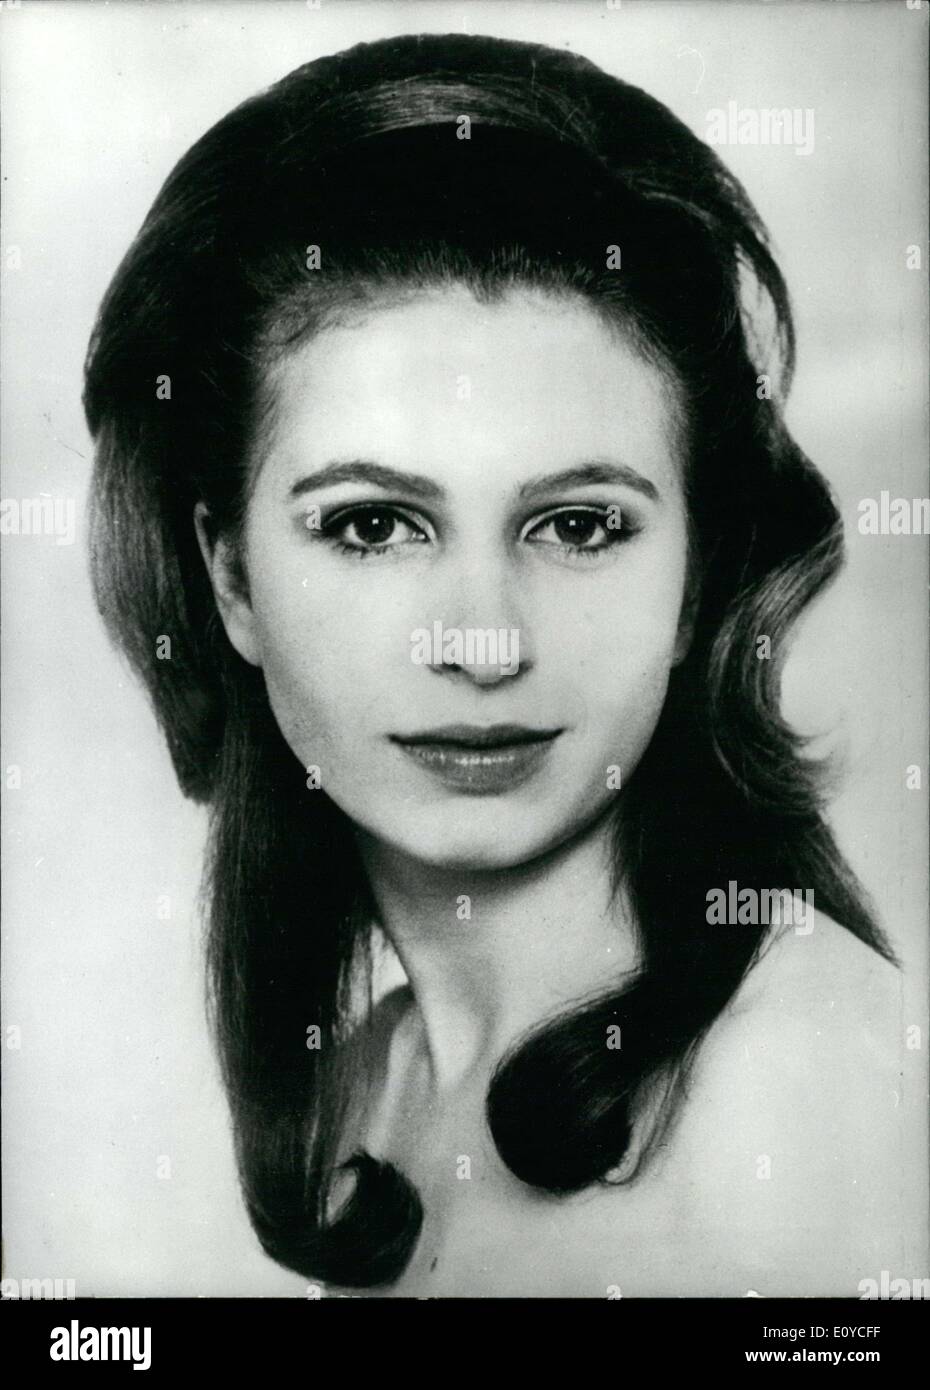 agosto-15-1969-la-princesa-ana-celebra-su-19-cumpleanos-e0ycff.jpg